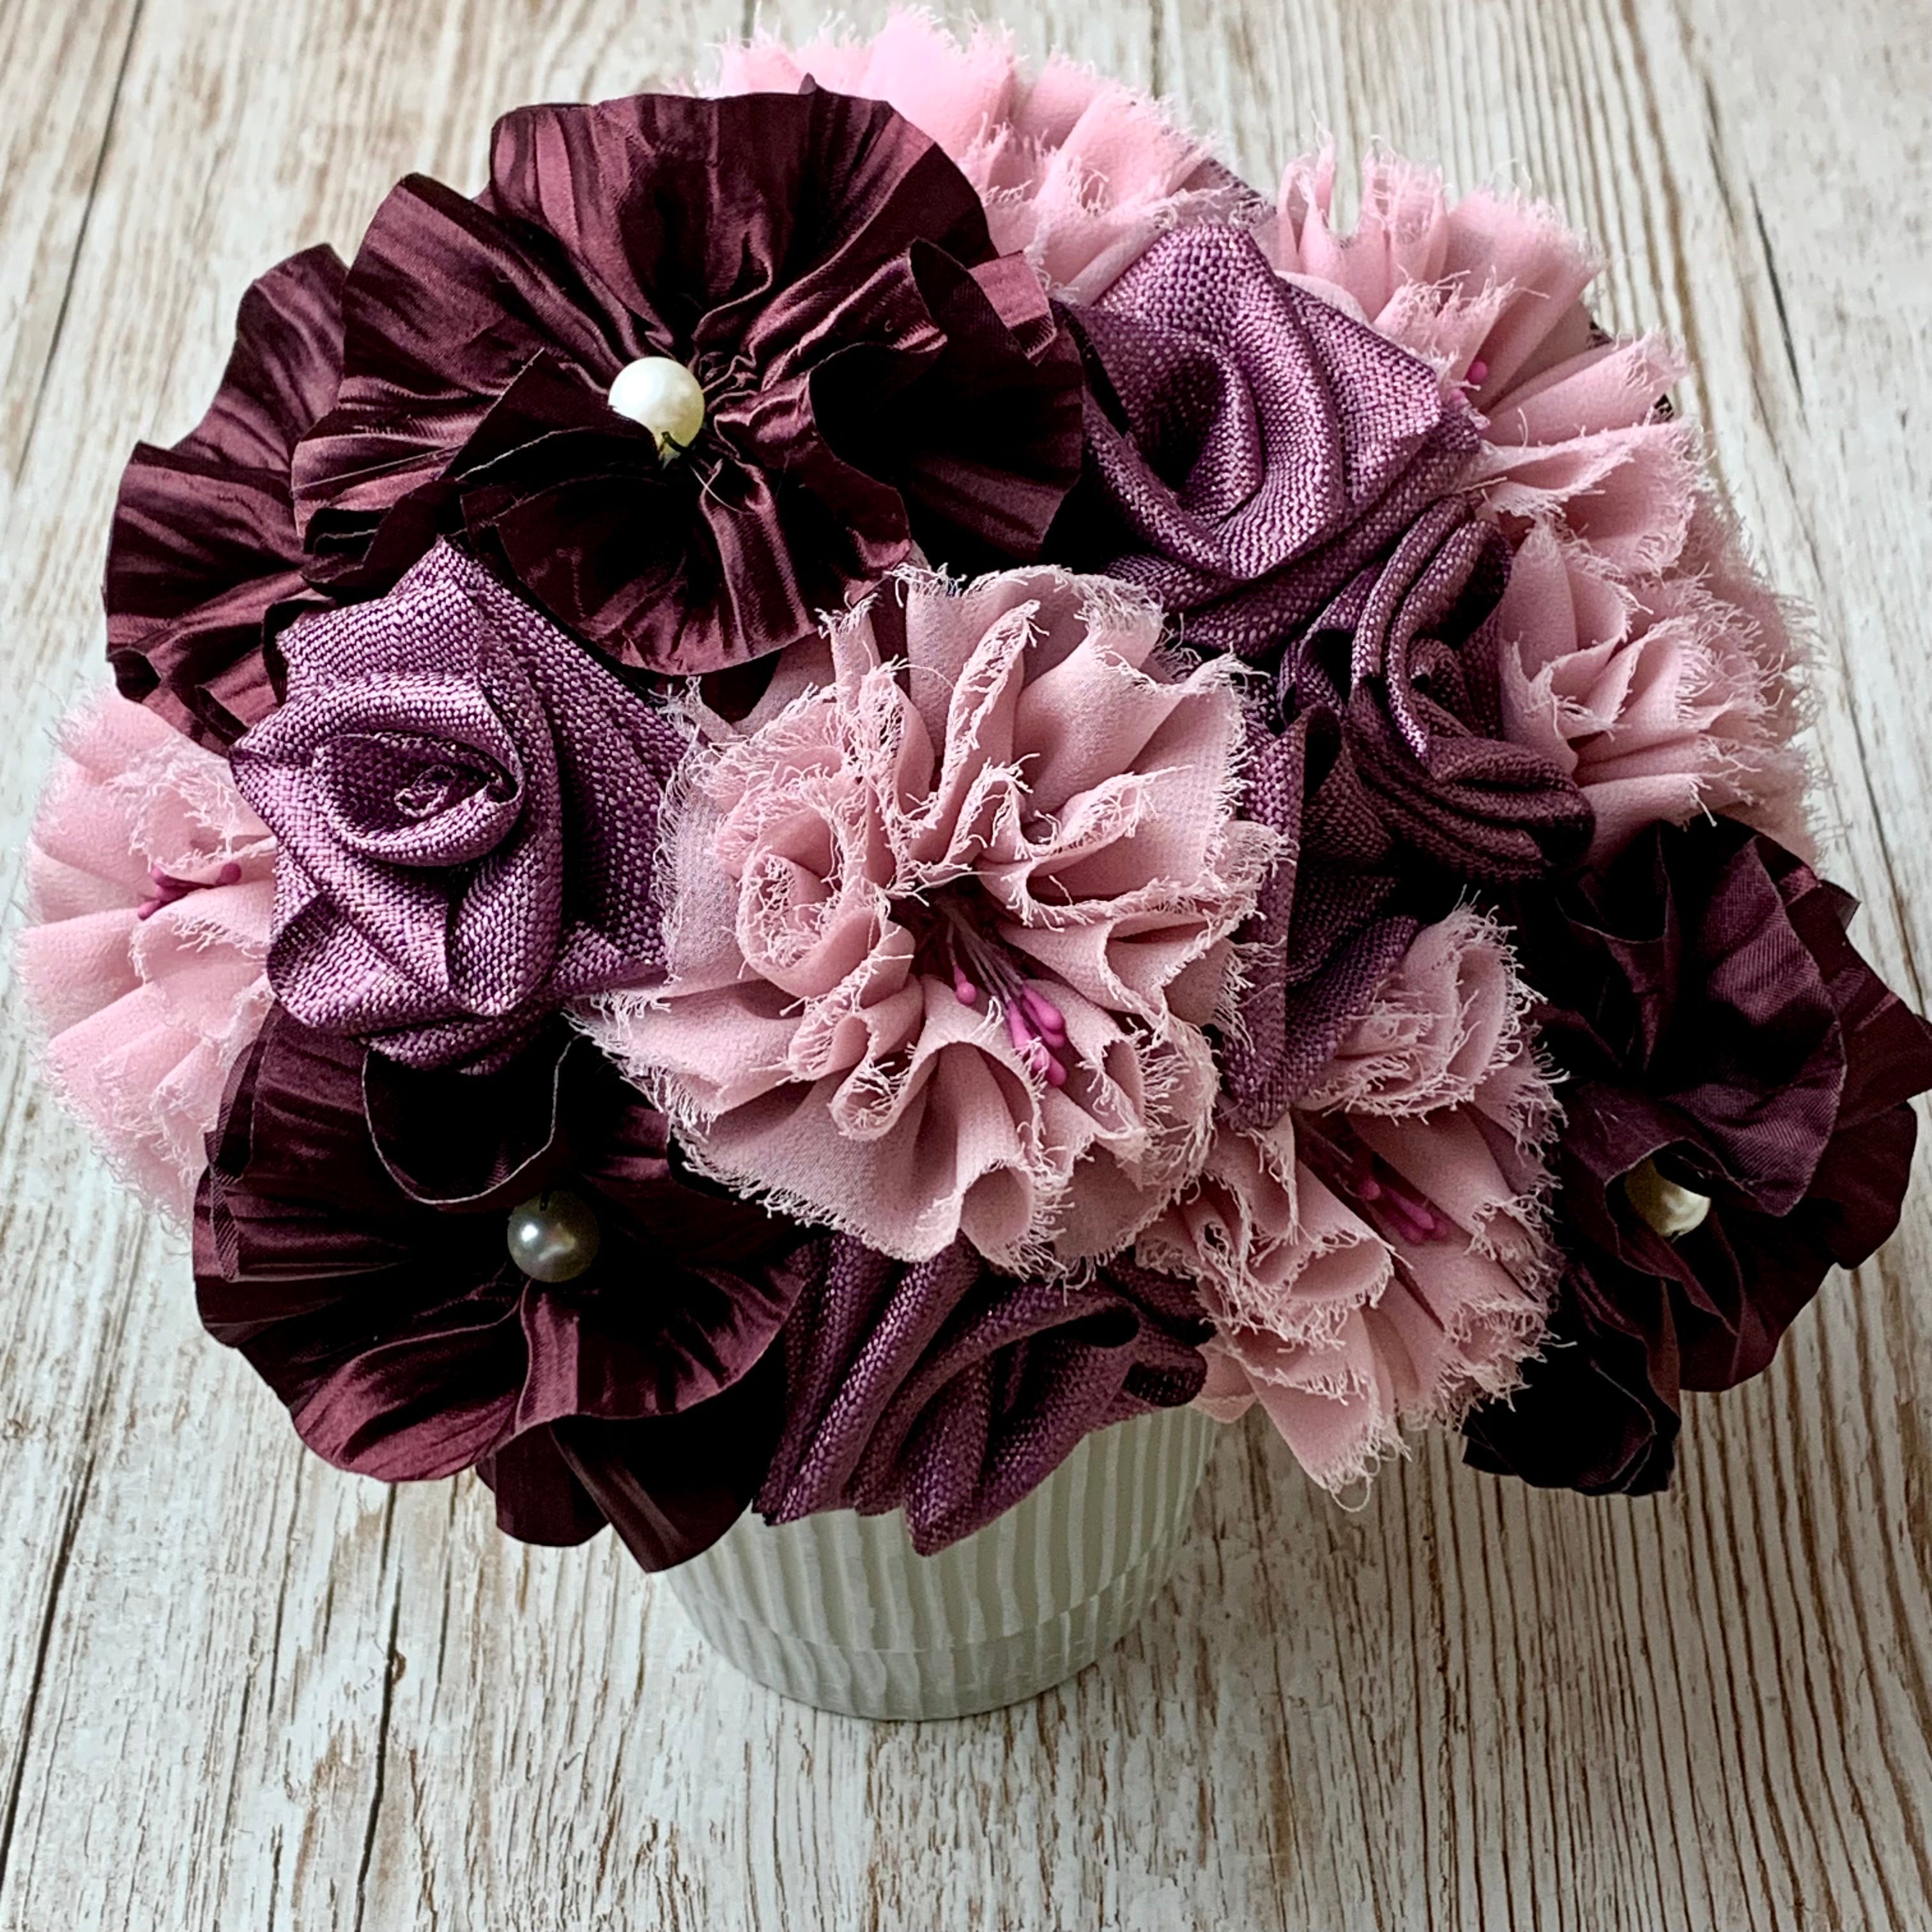 Mixed Flower Bouquet Ribbon Kits